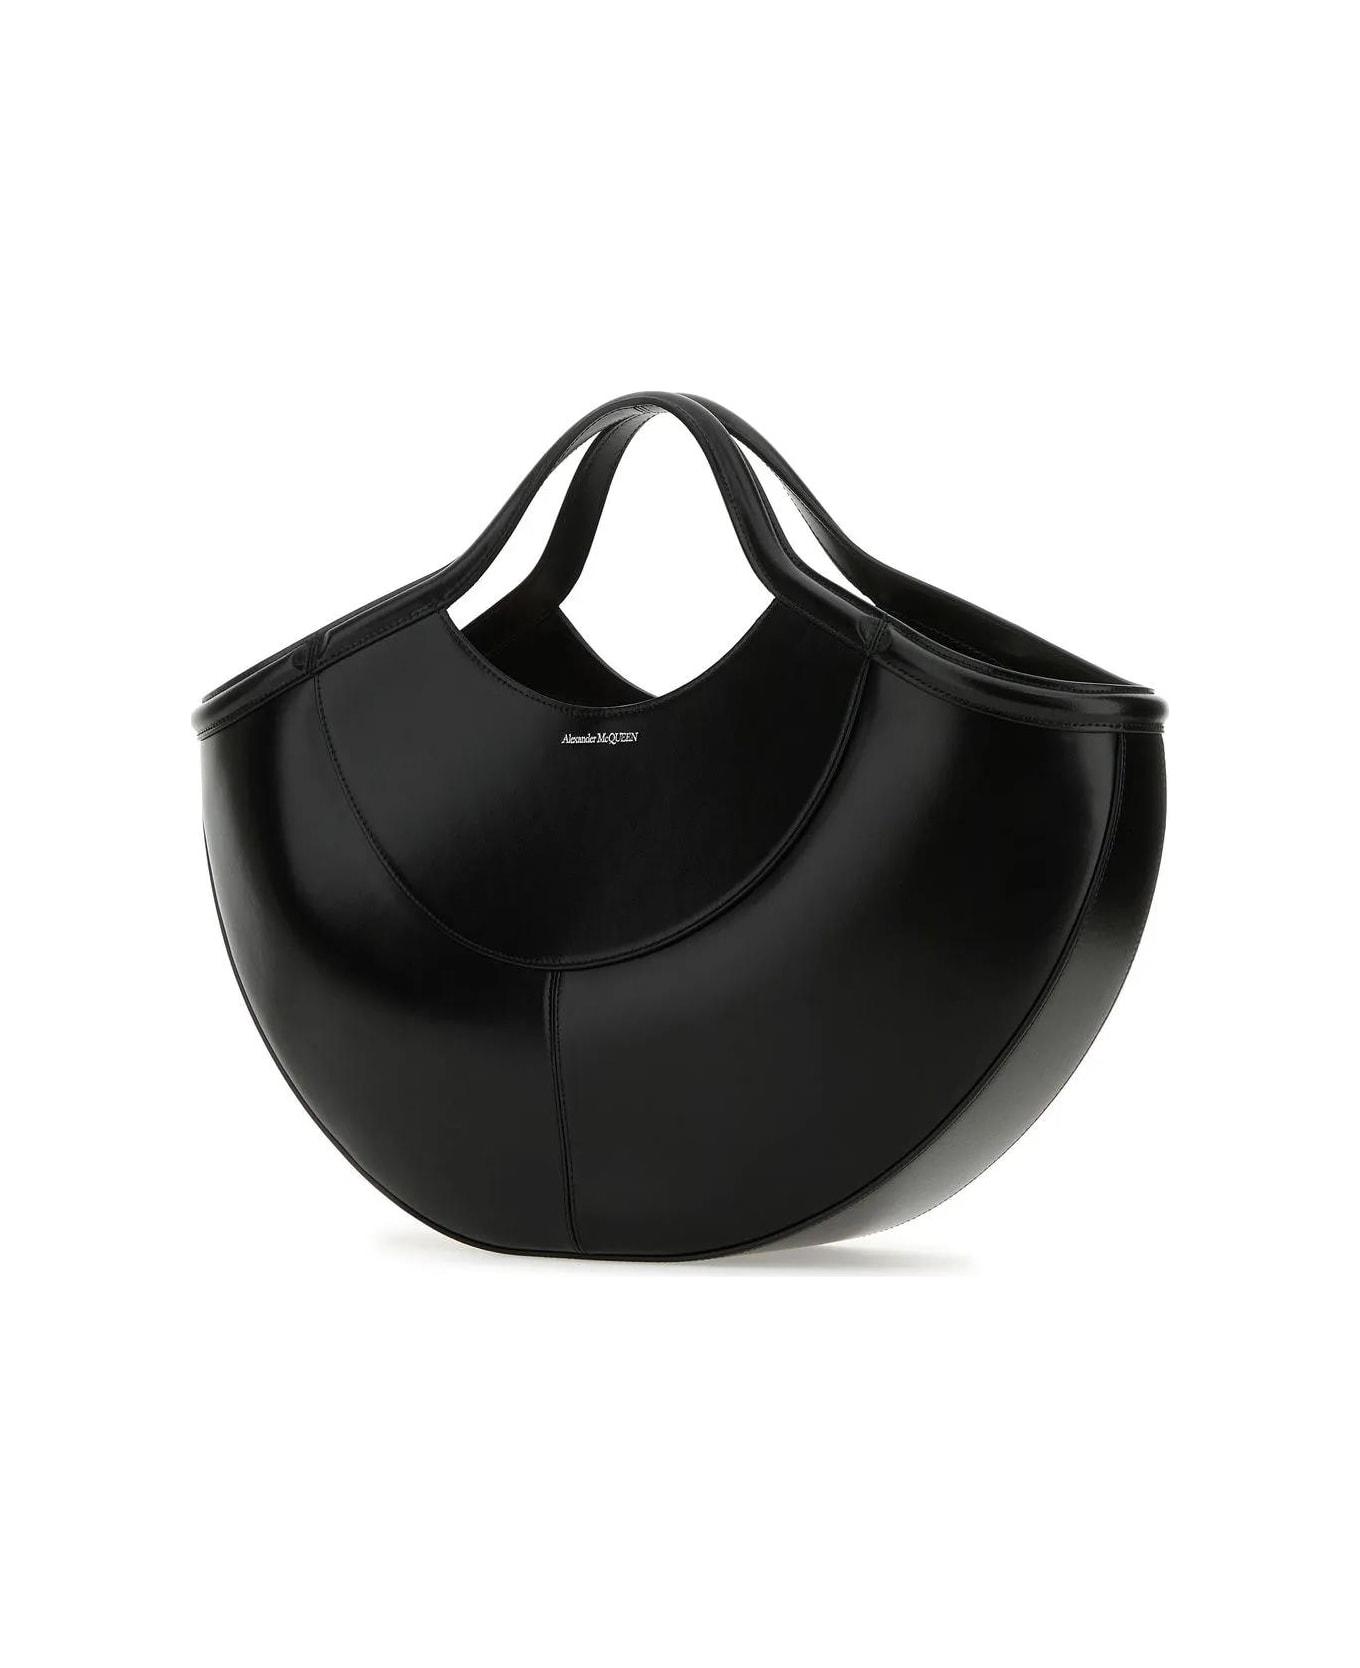 Alexander McQueen Black Leather Shopping Bag - Black トートバッグ